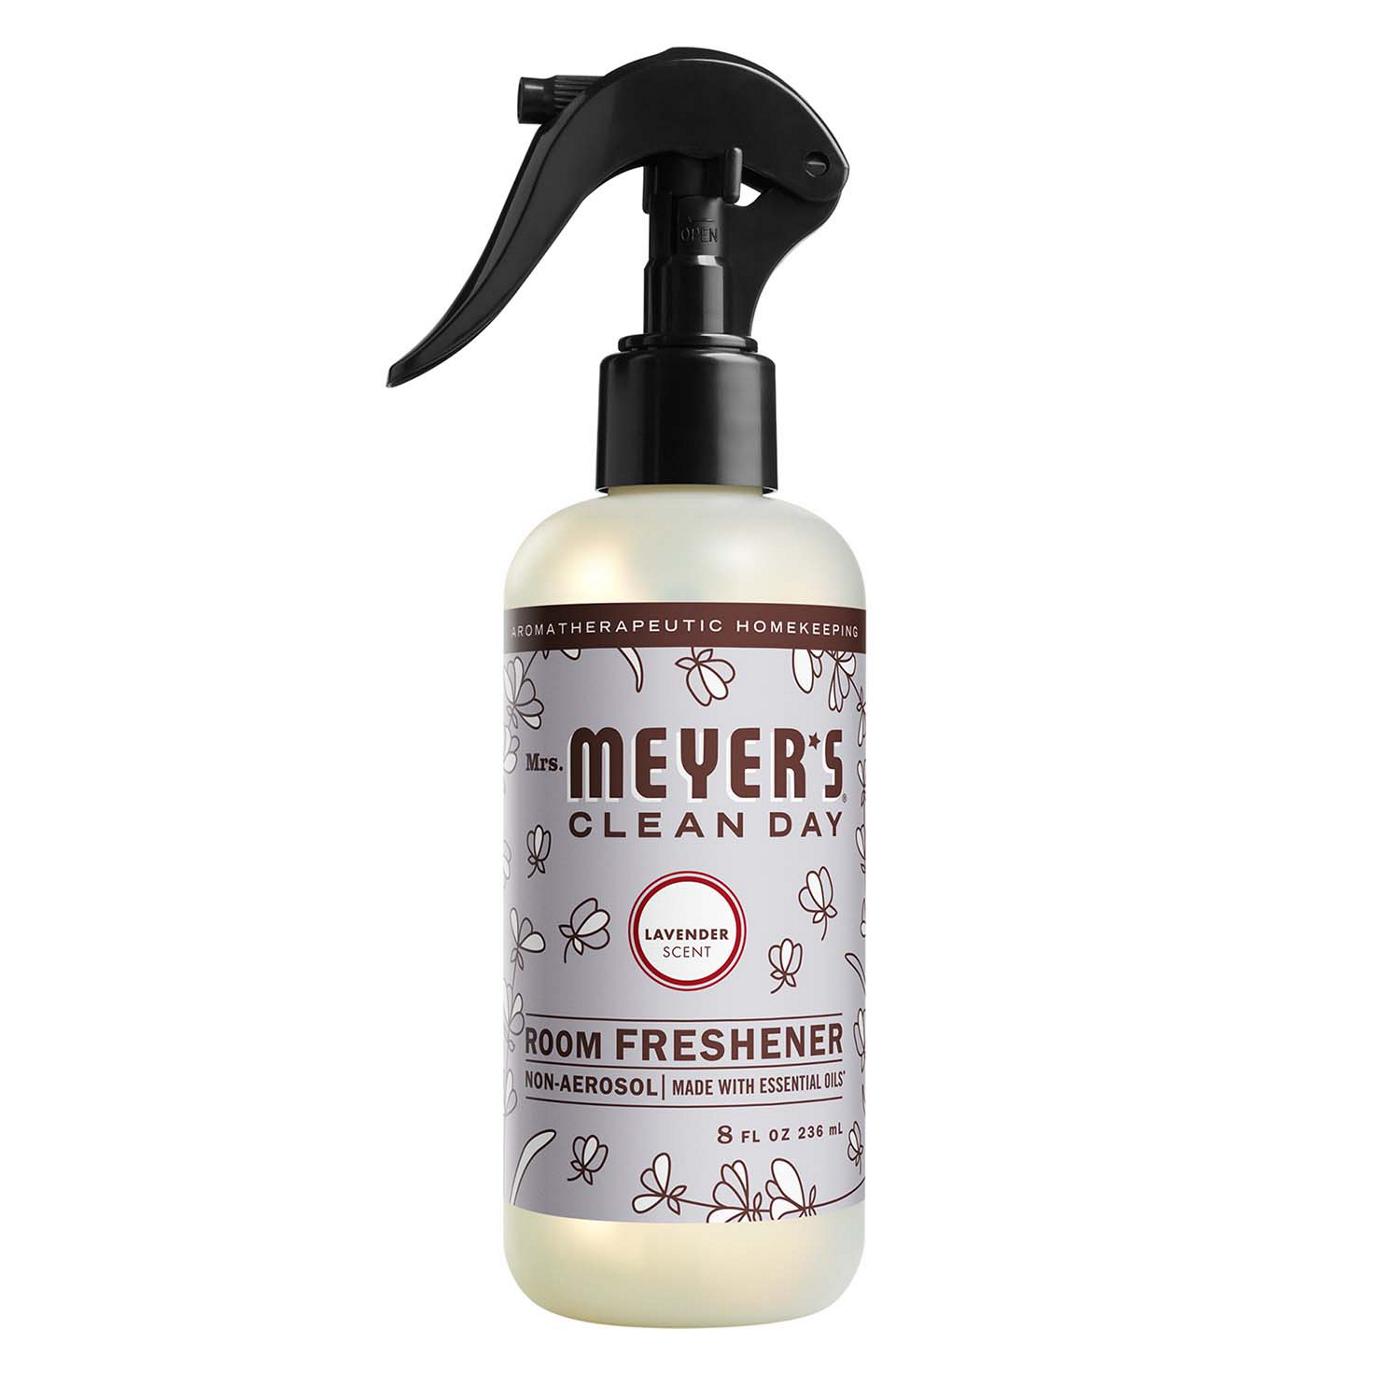 Mrs. Meyer's Clean Day Lavender Room Freshener; image 1 of 5